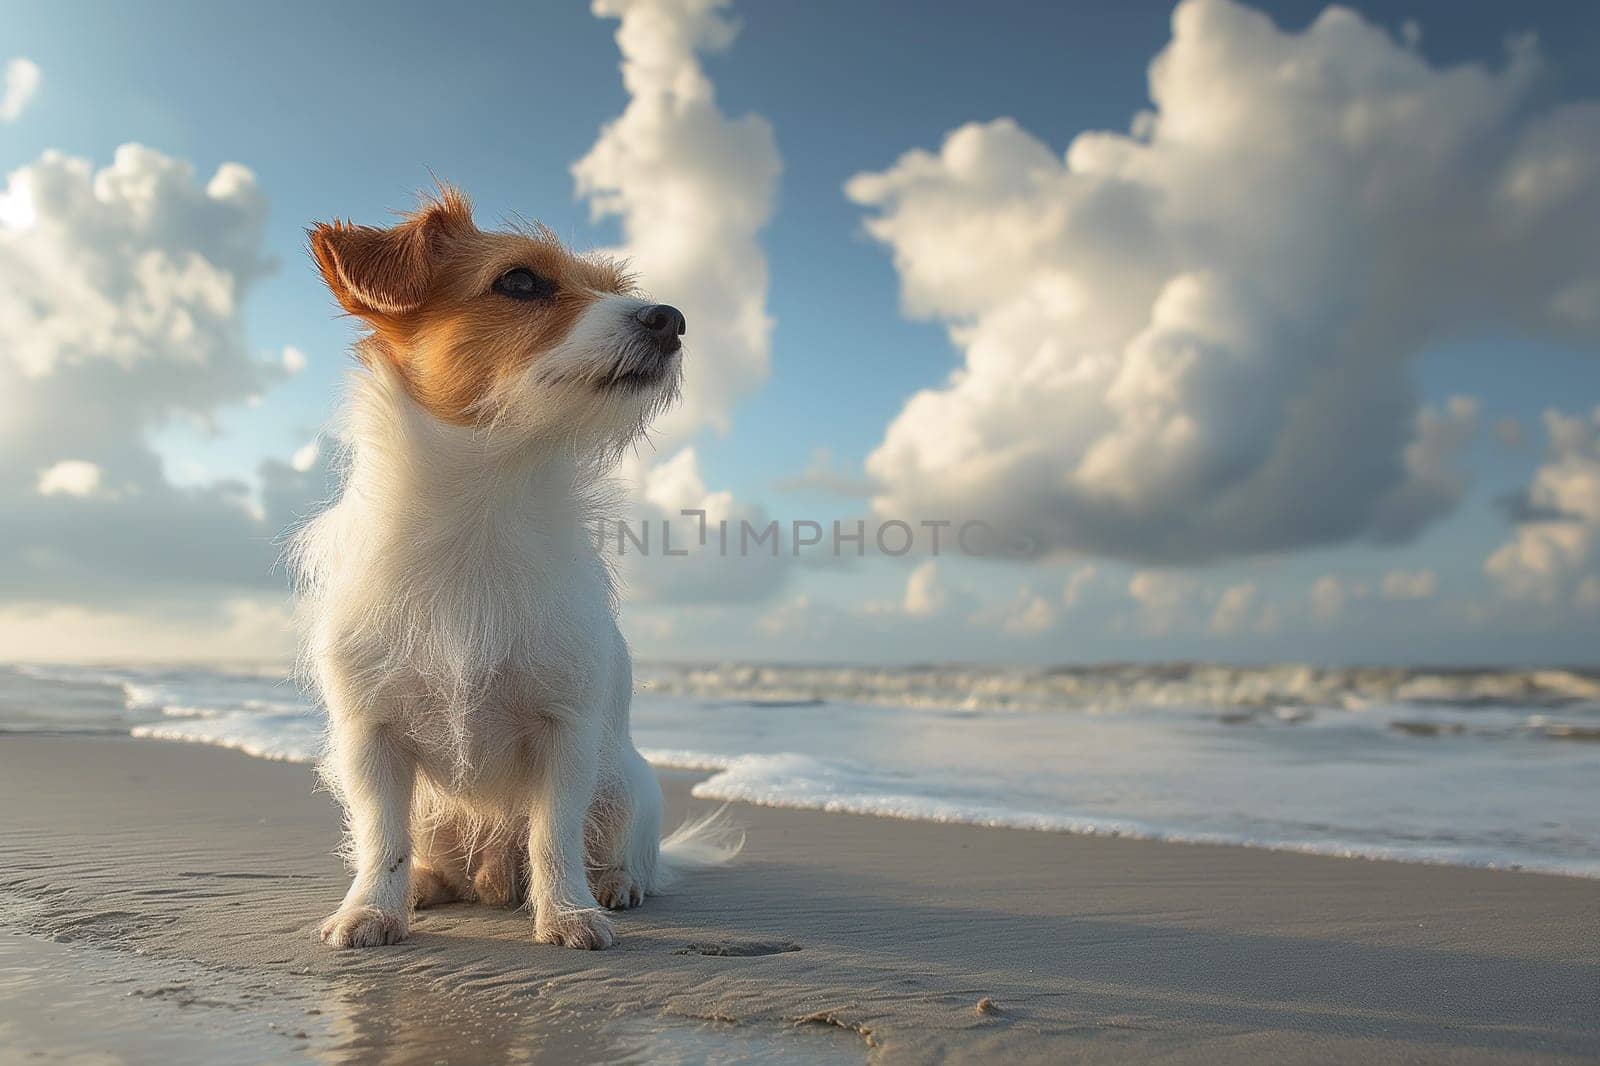 Happy dog enjoying a sunset on the beach by Hype2art